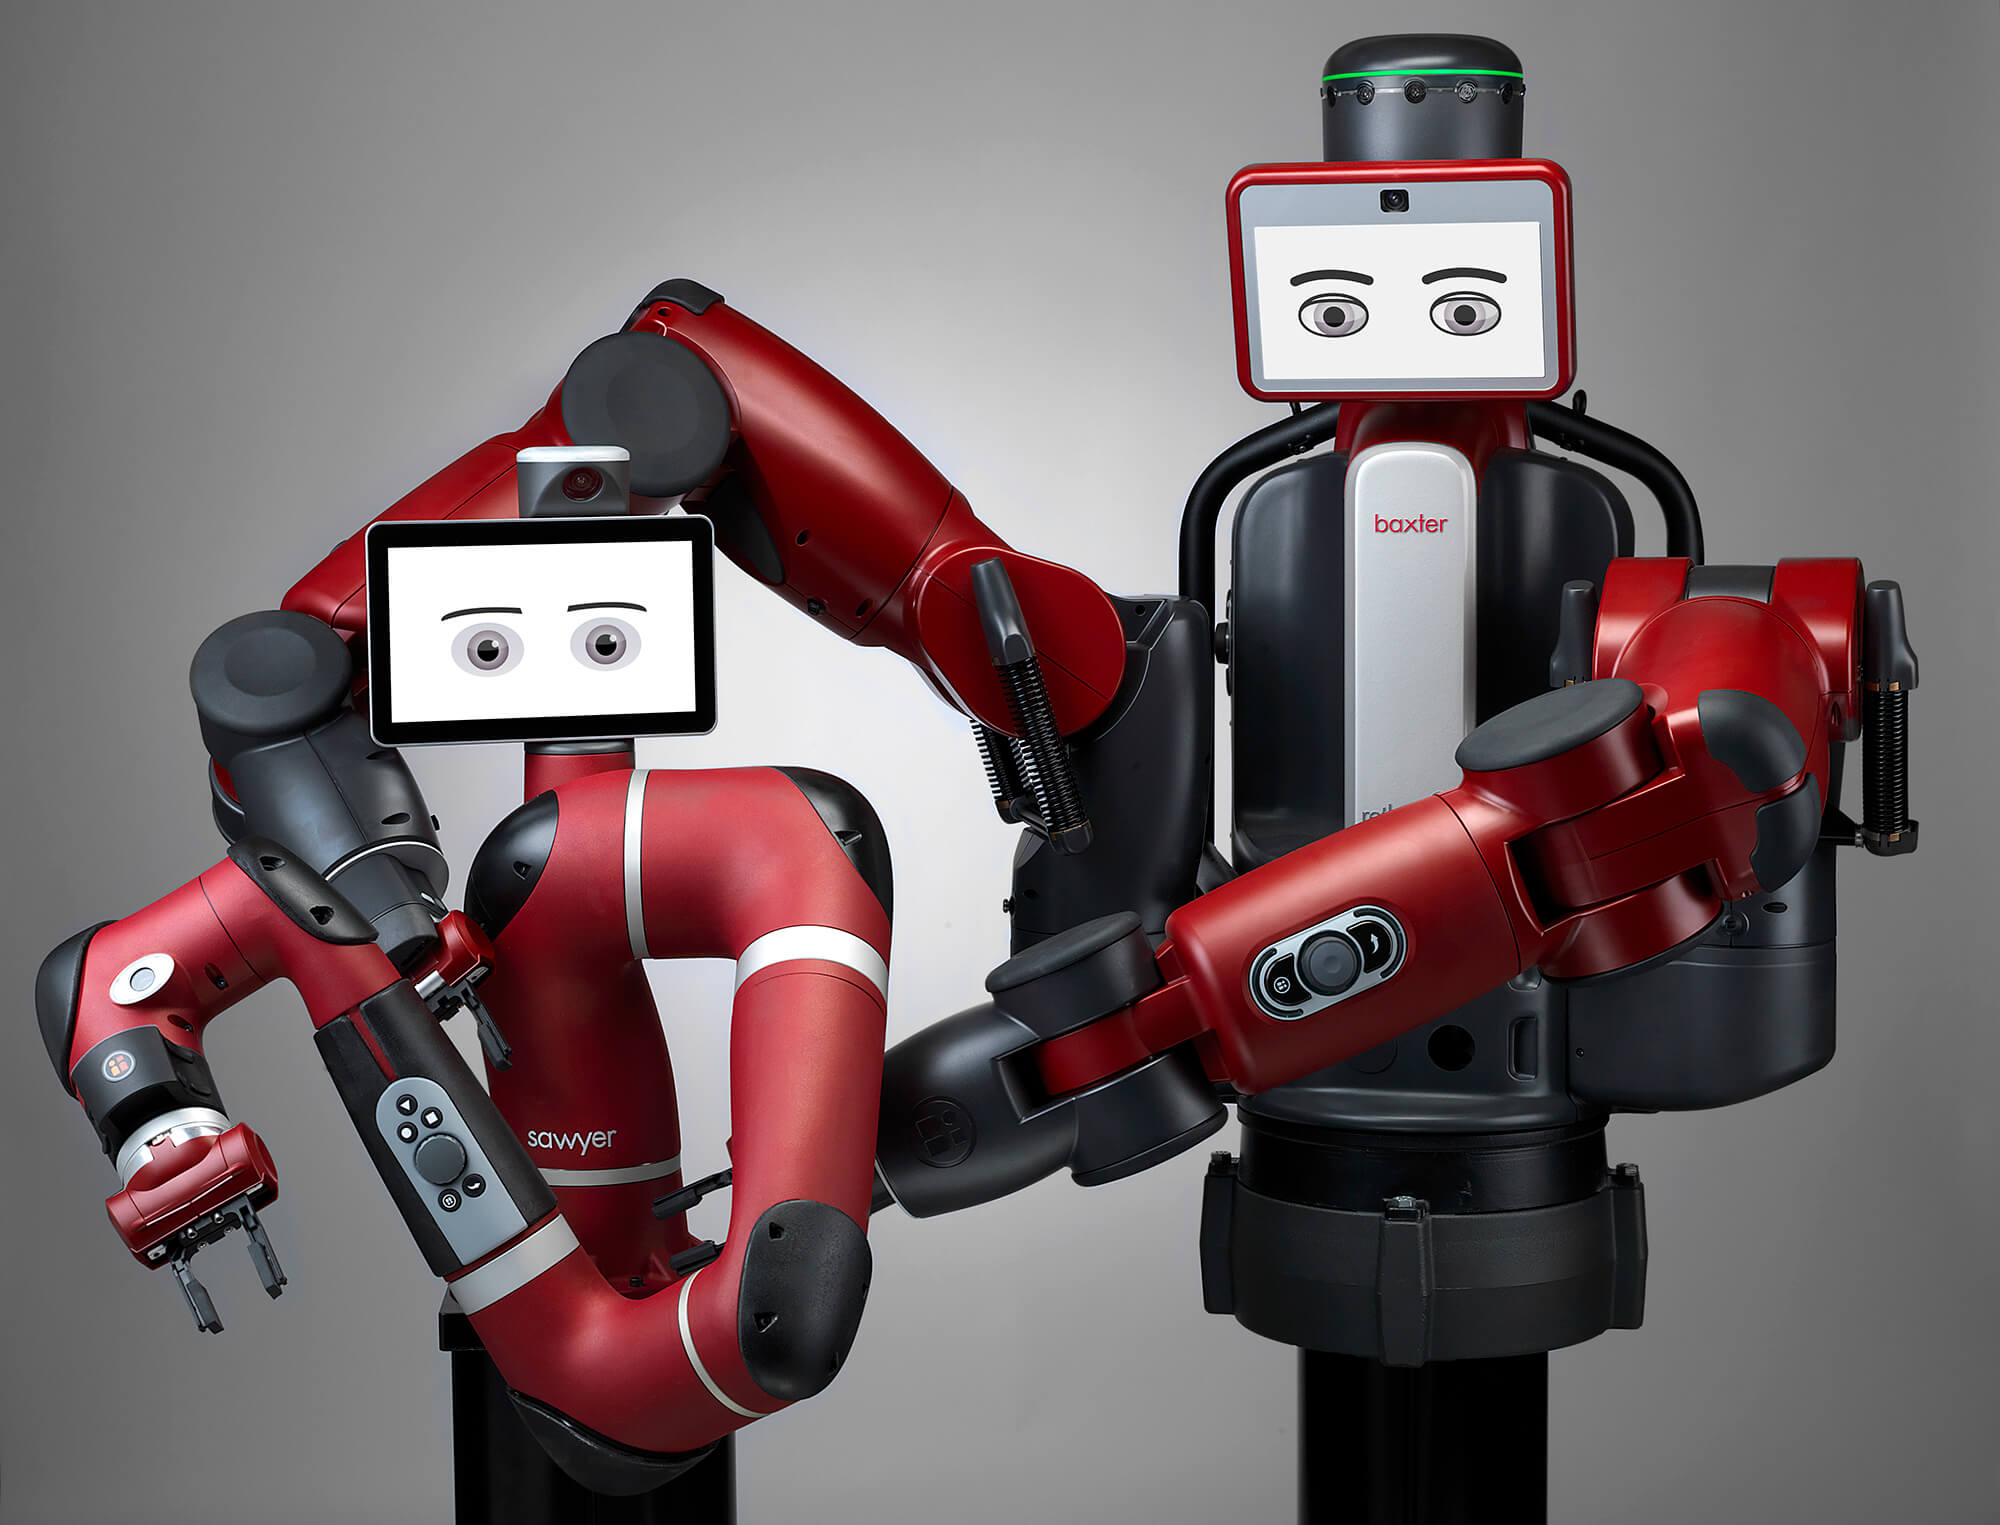 Job Creation and the Robot Apocalypse